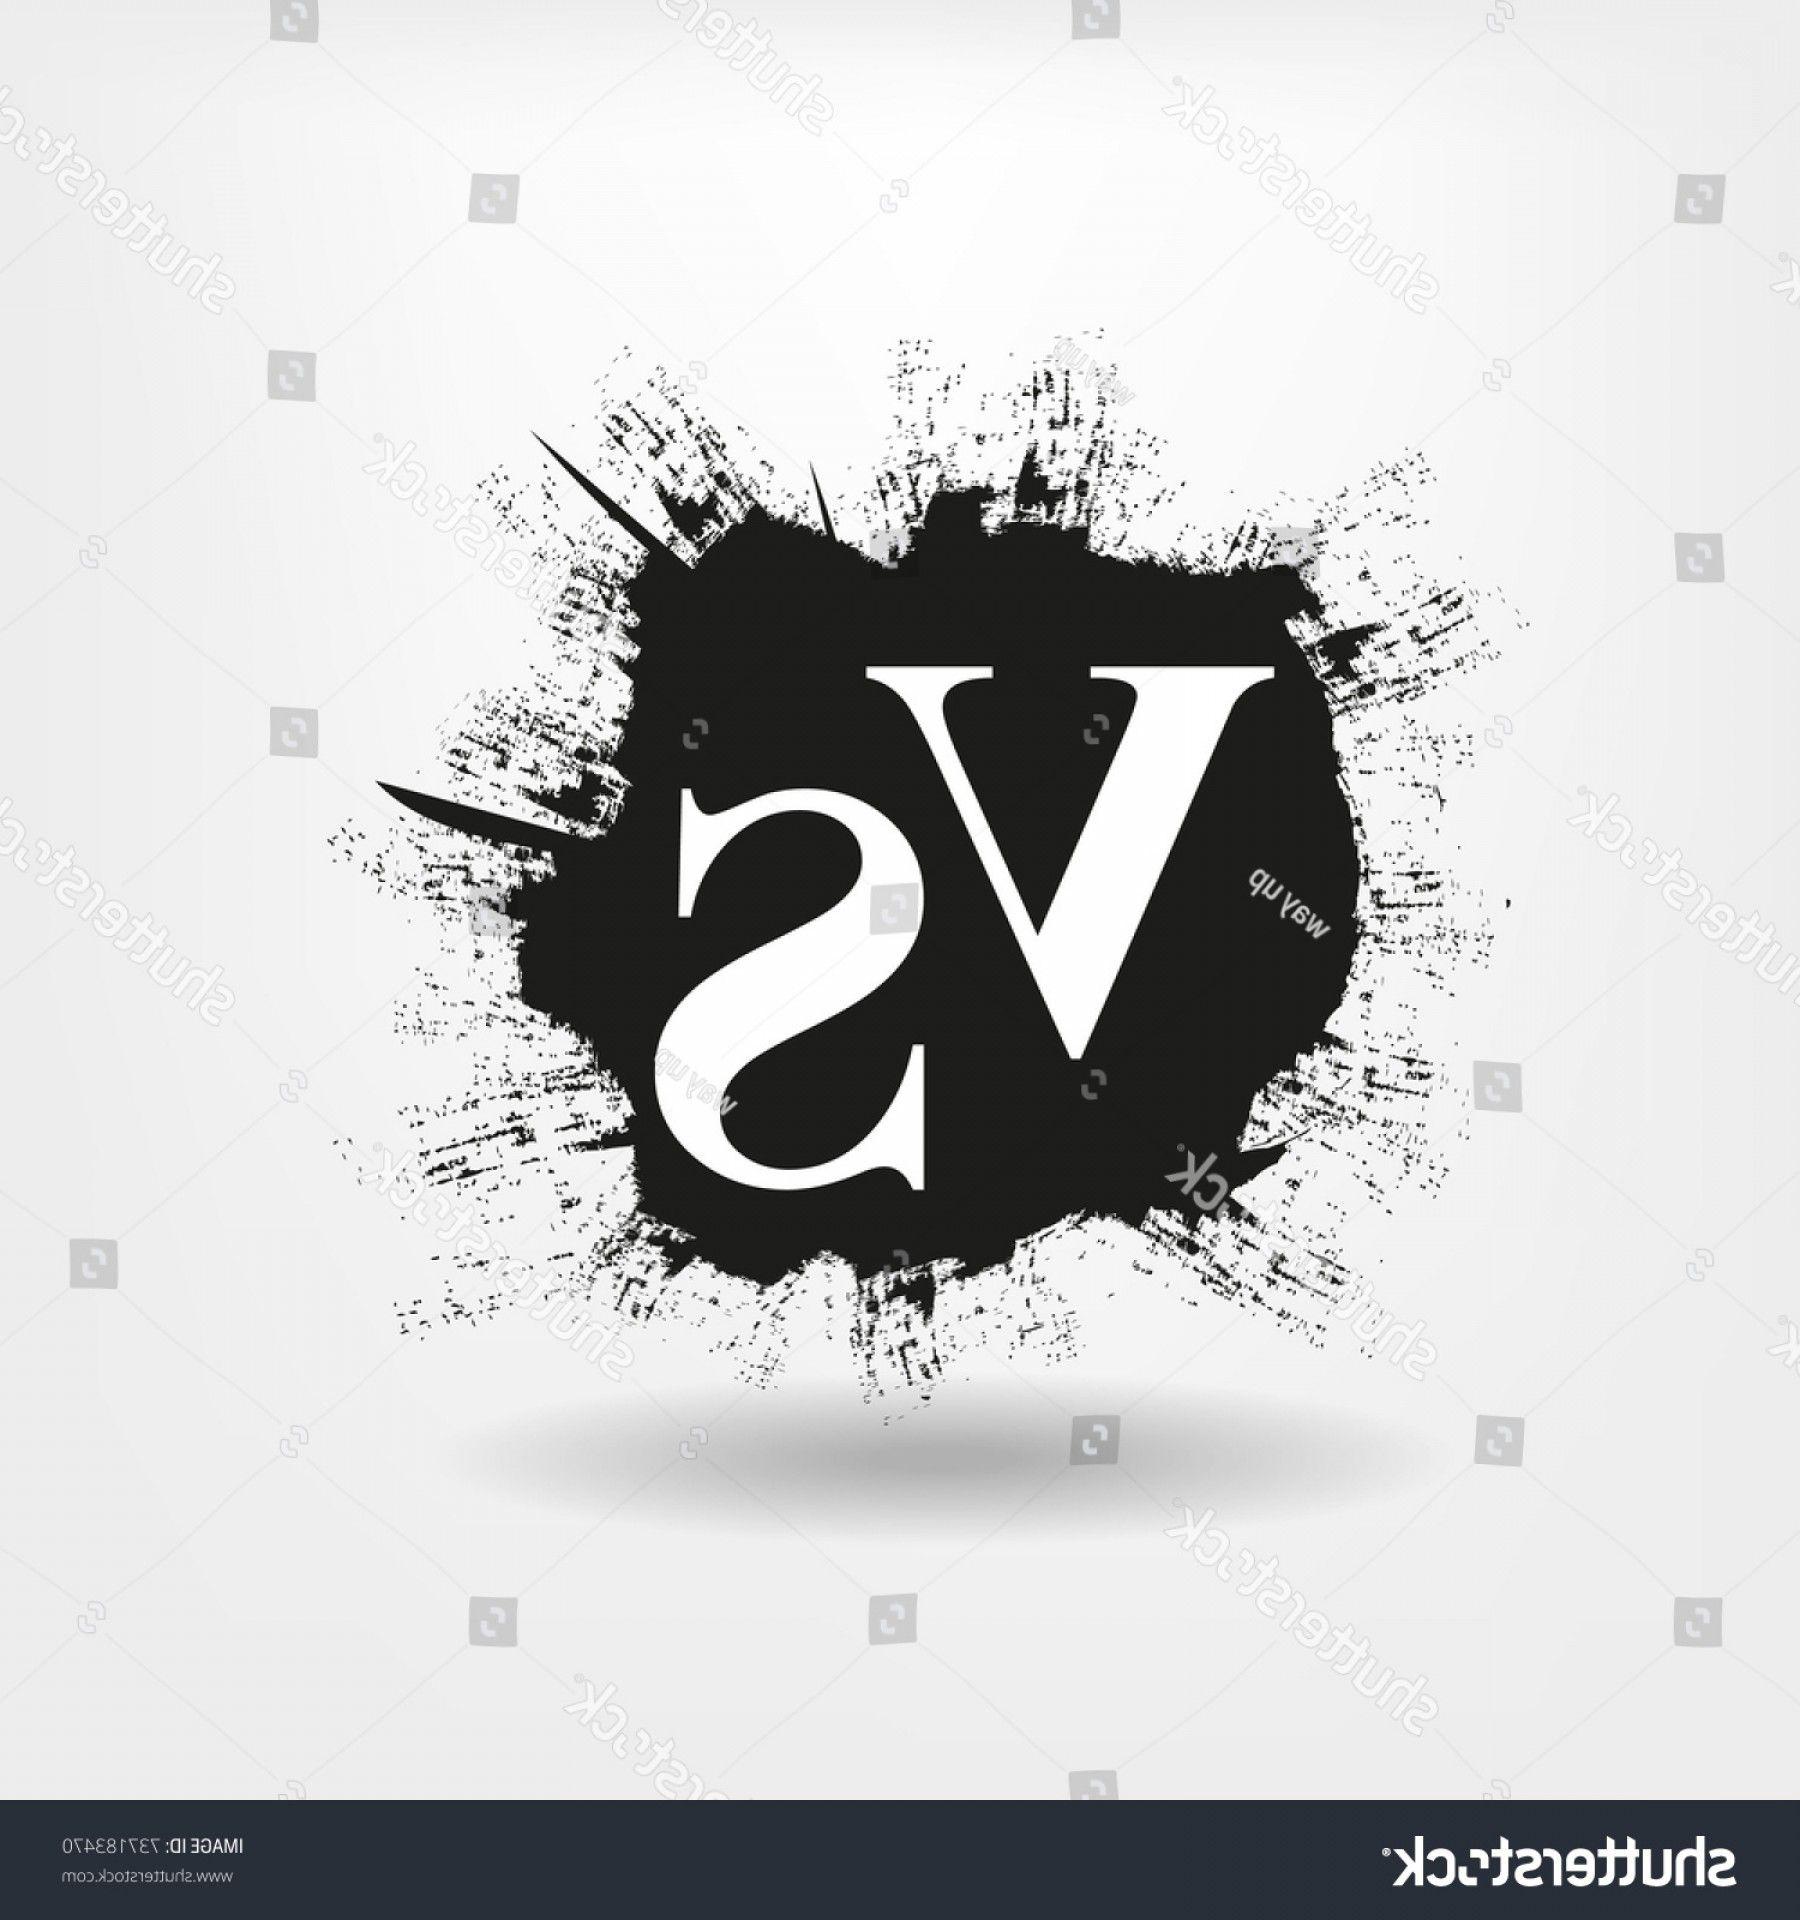 Versus Logo - Versus Logo Vs Vector Letters Illustration